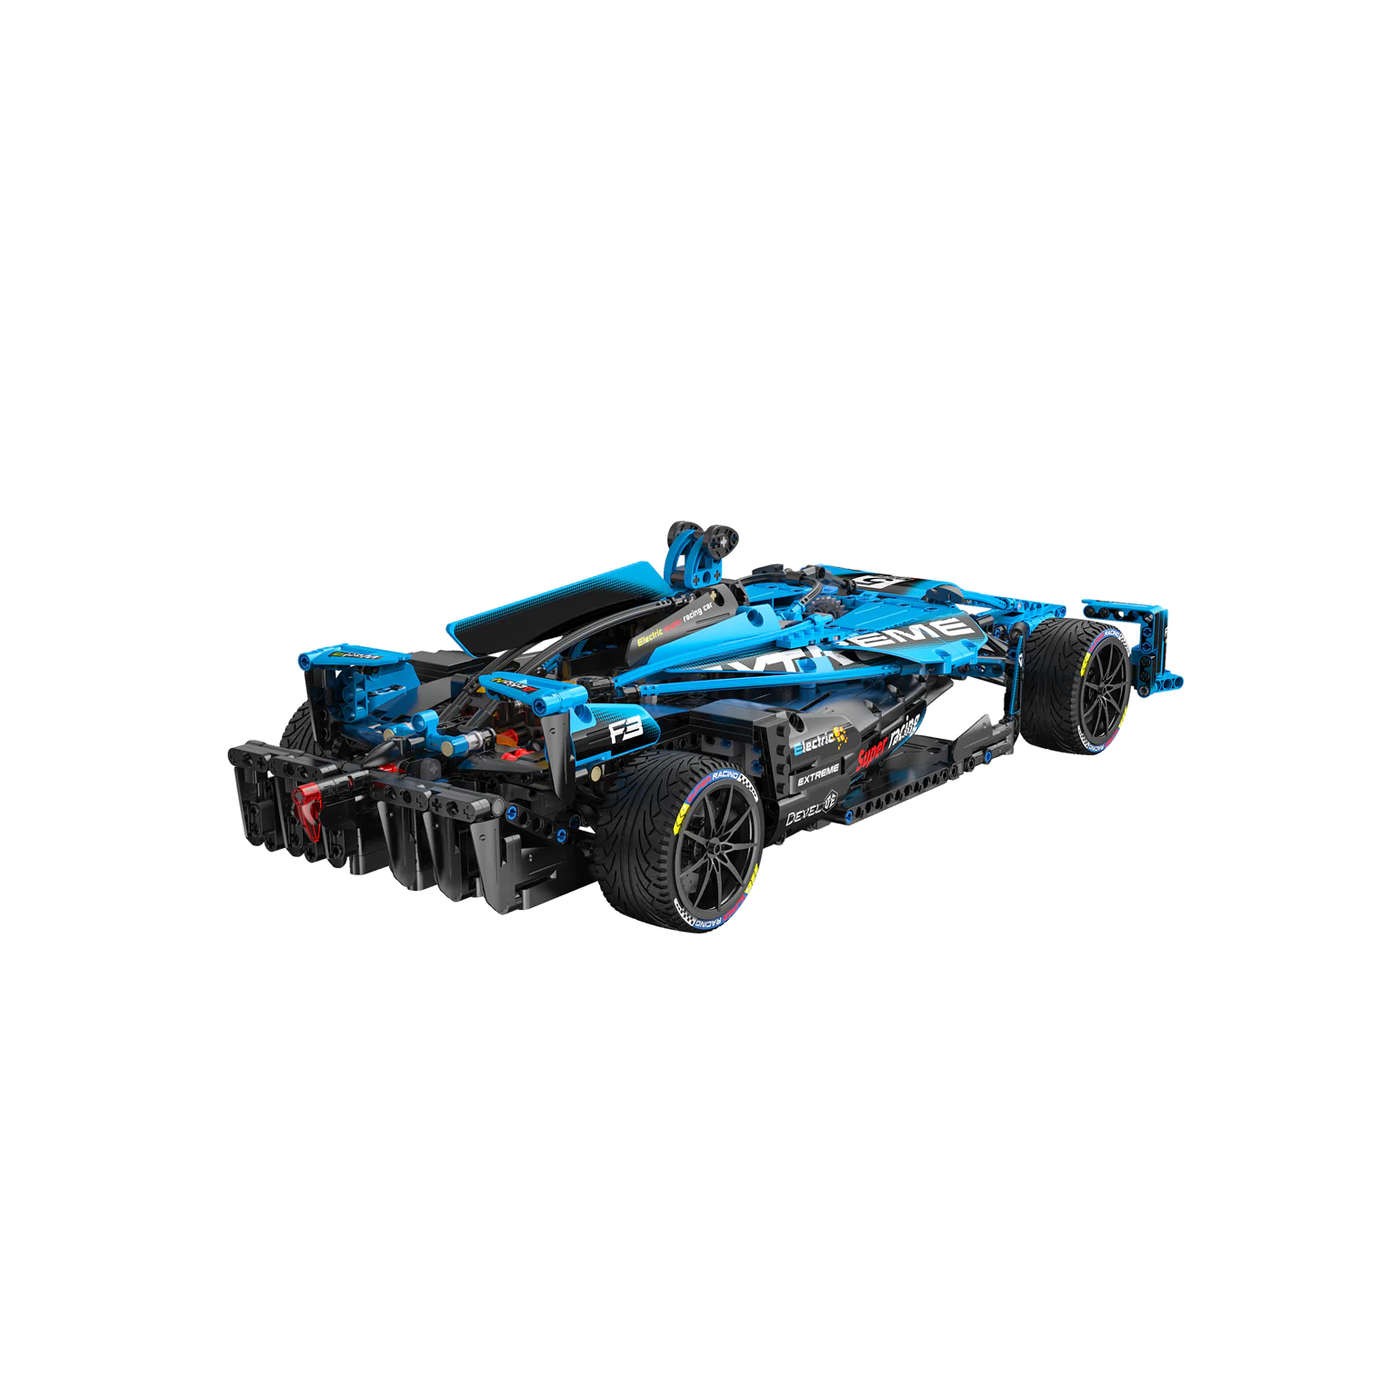 Formula 1667el racing pads EE